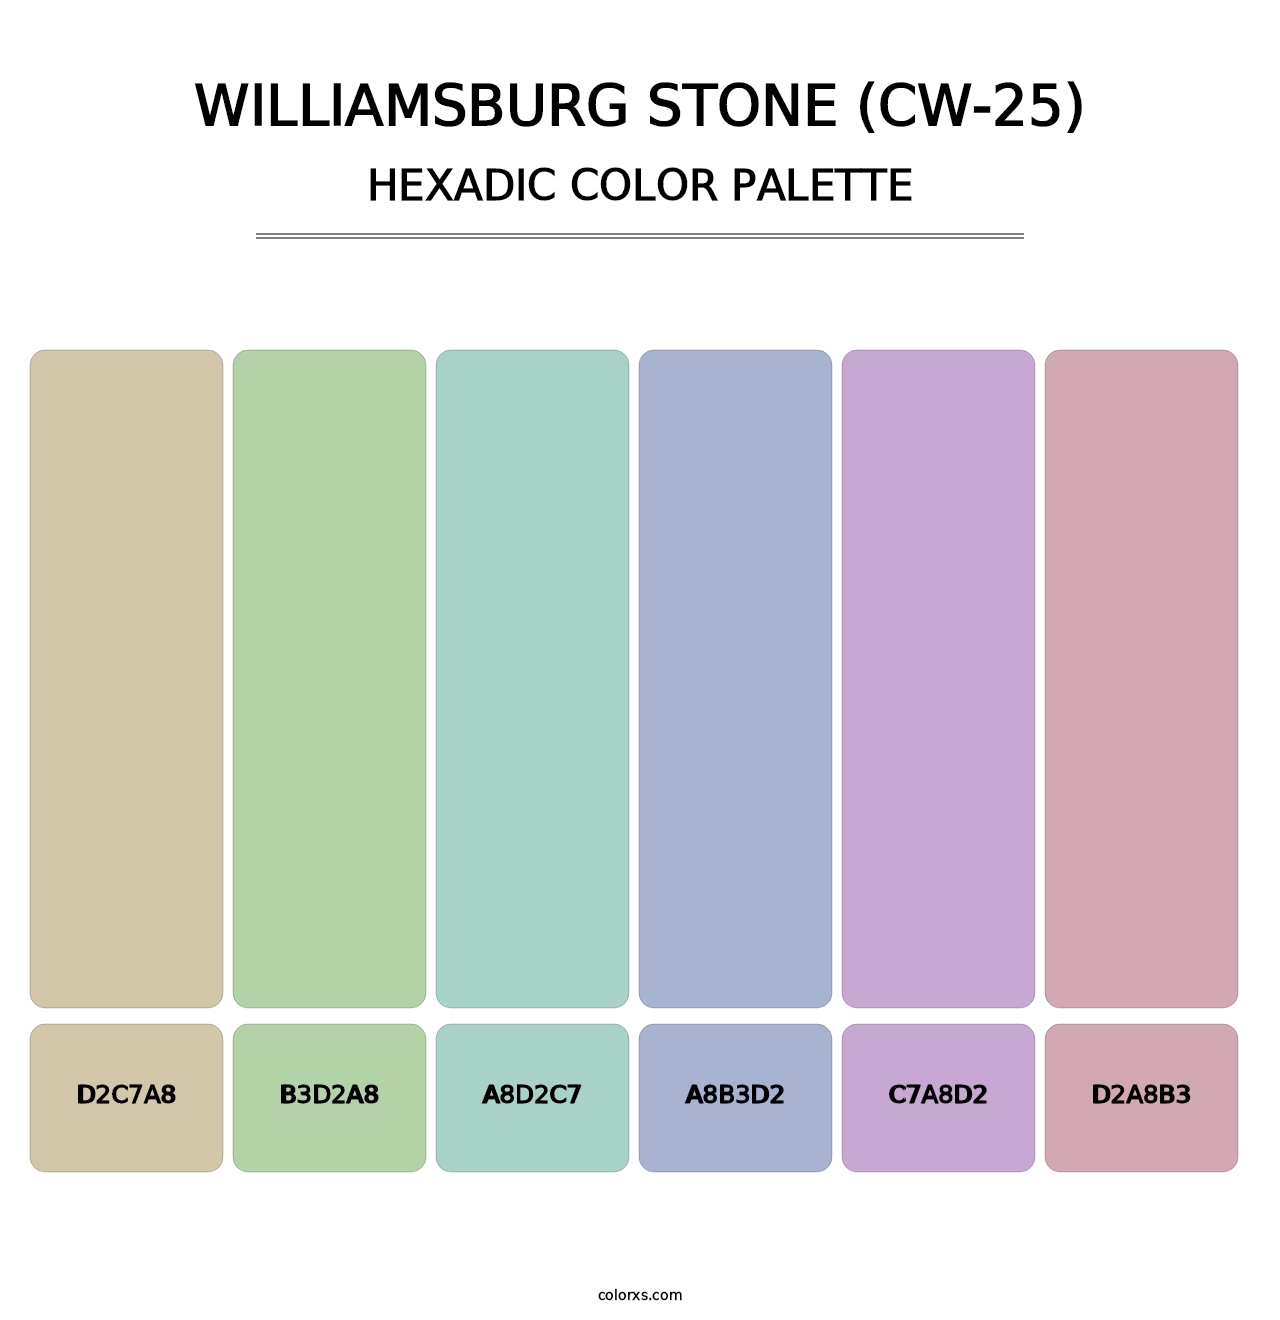 Williamsburg Stone (CW-25) - Hexadic Color Palette